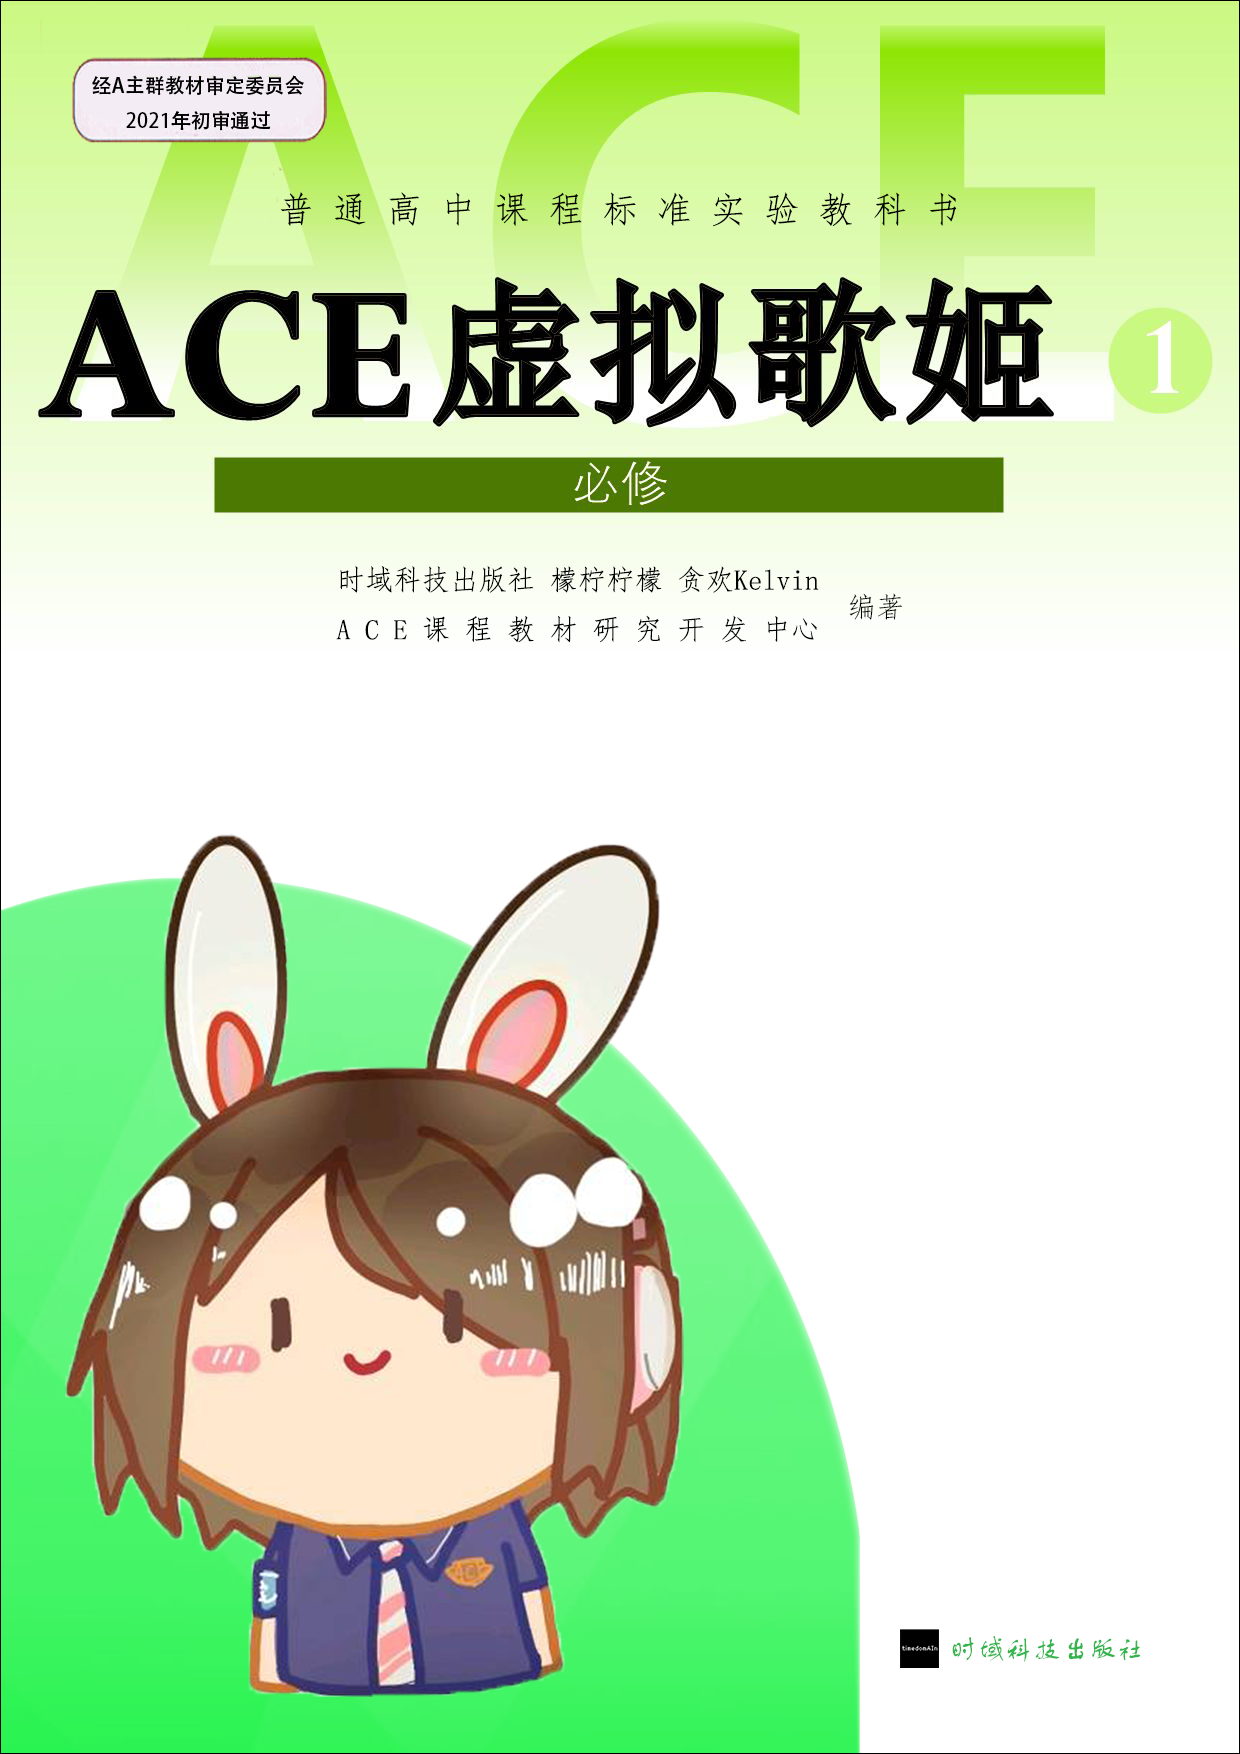 ACE界面/功能介紹 v2.5.4|ACE虛擬歌姬 - 第3張